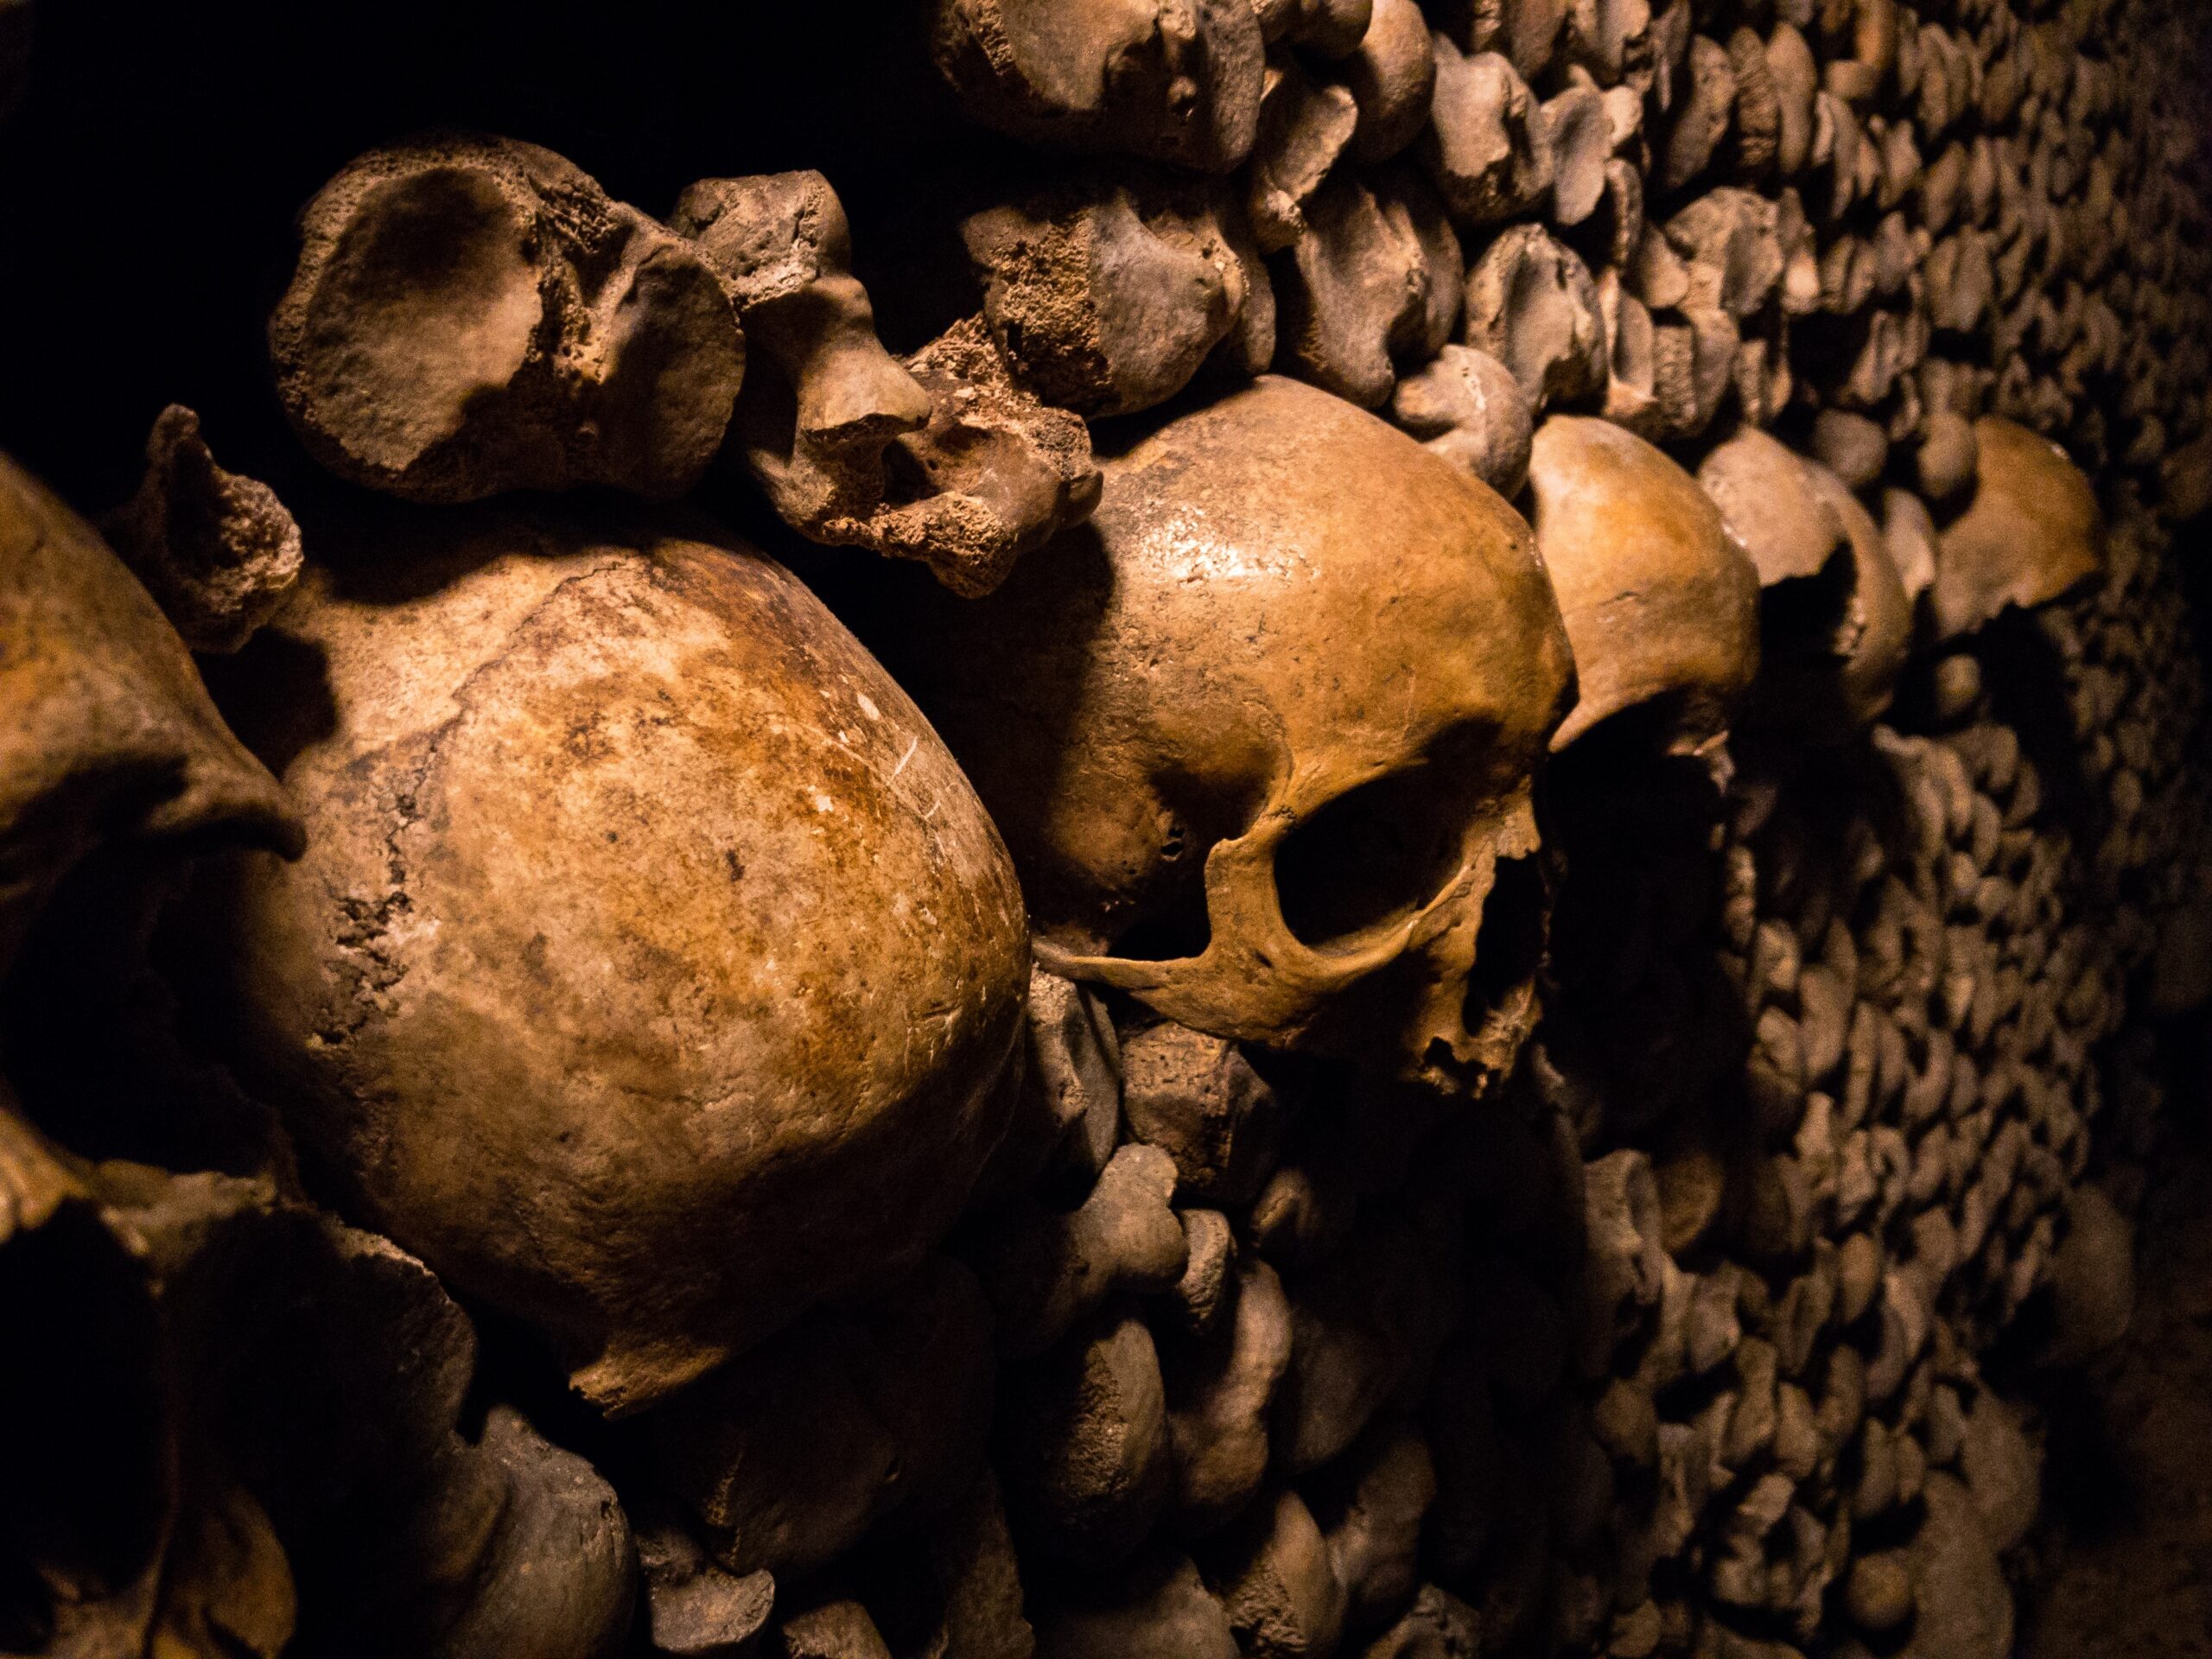 Skulls and bones in the Paris Catacombs